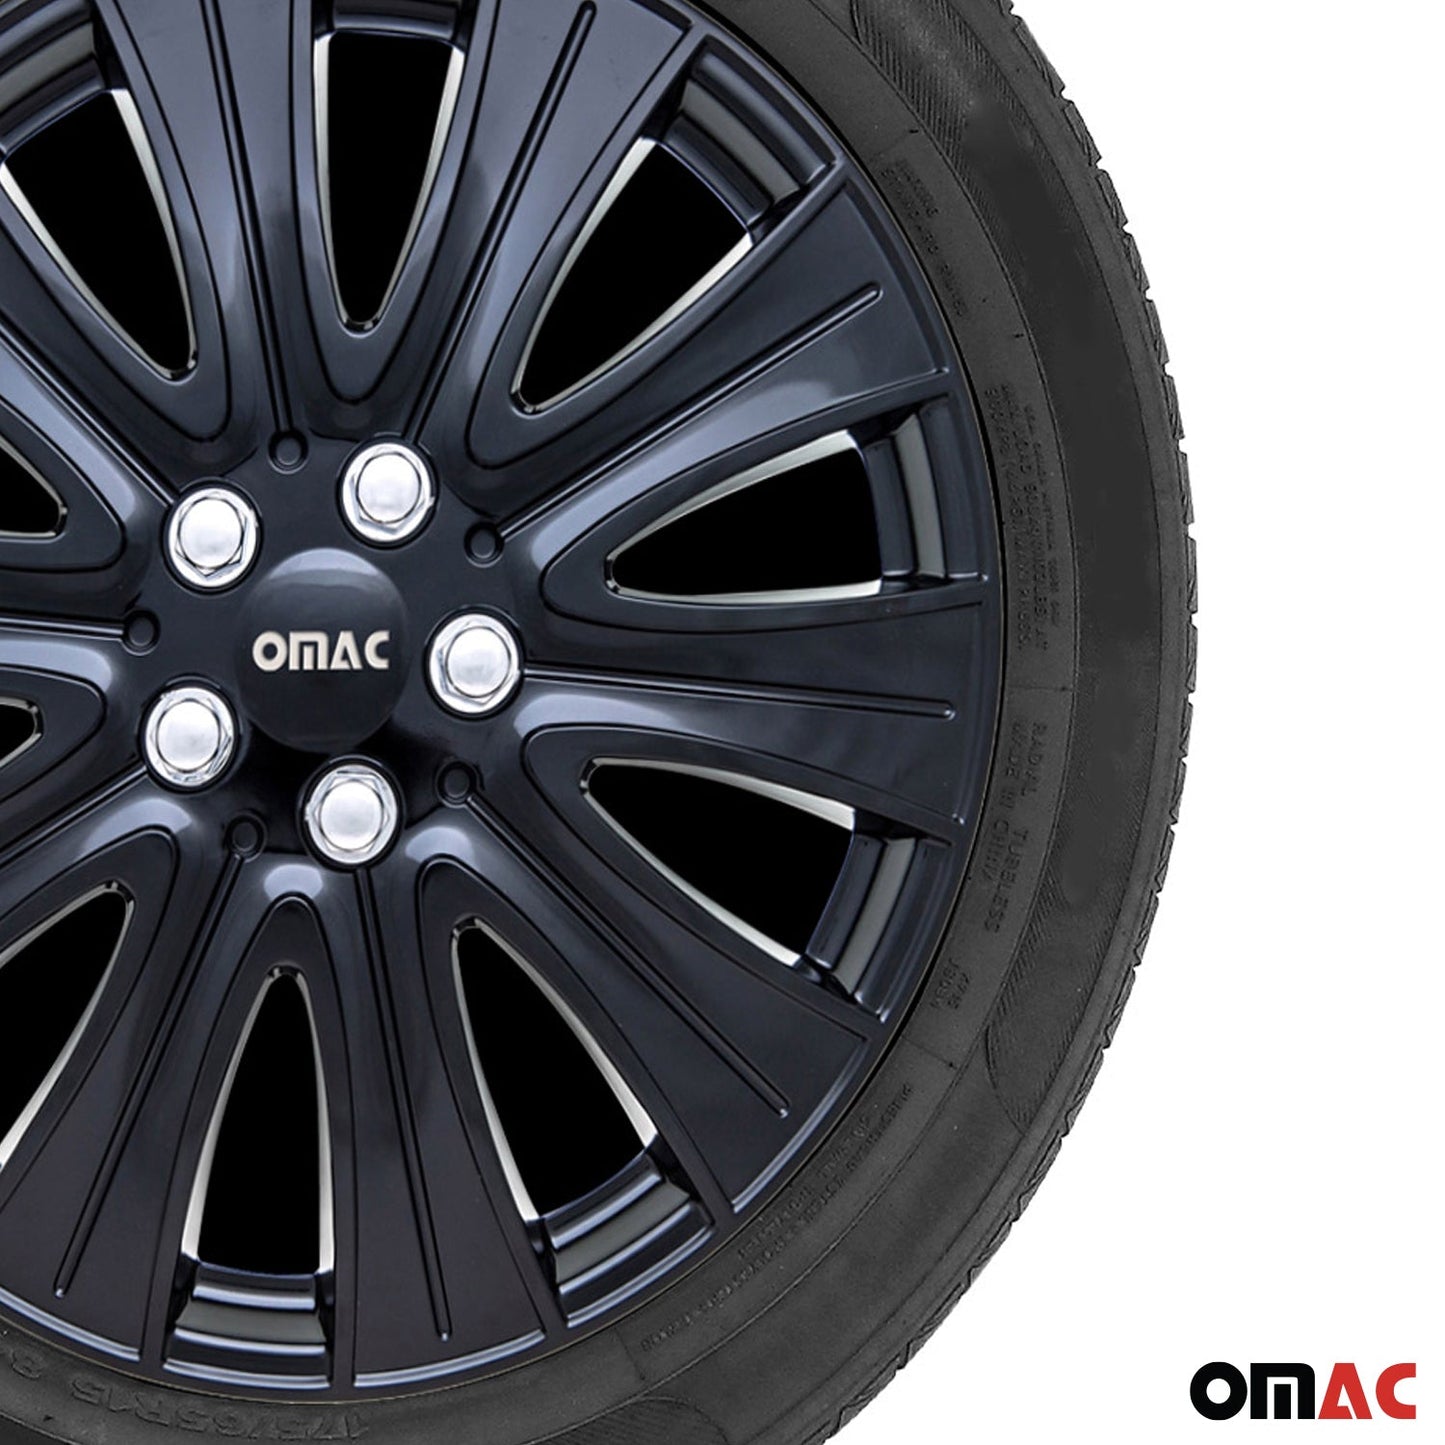 OMAC 14" Wheel Covers Guard Hub Caps Durable Snap On ABS Gloss Black Silver 4x OMAC-WE40-GBK14